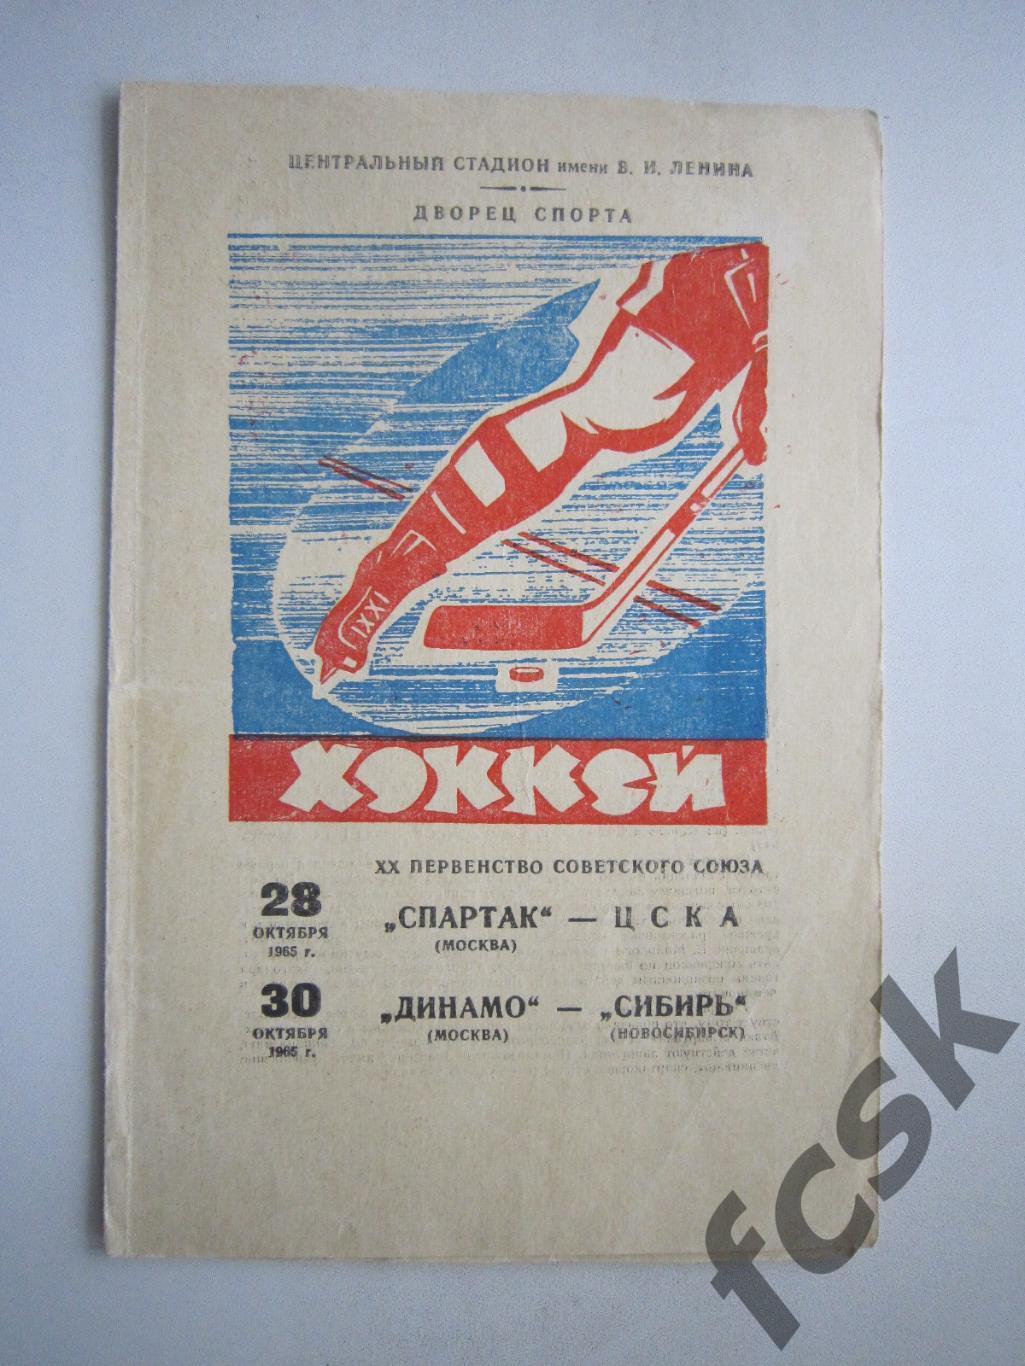 Спартак Москва - ЦСКА Динамо Москва - Сибирь Новосибирск 28-30.10.1965 (ф)